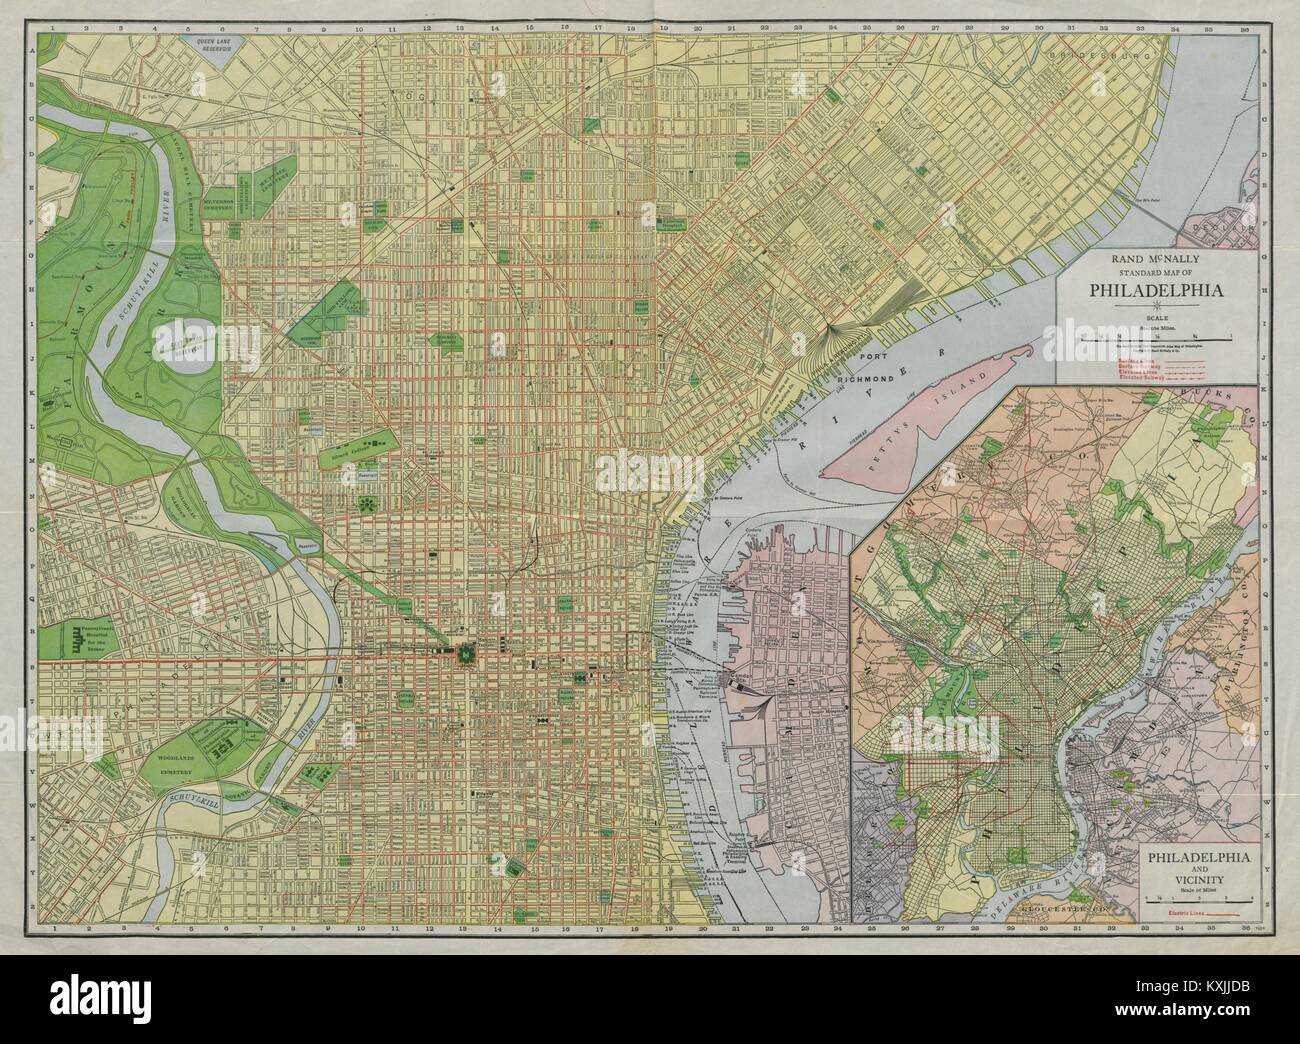 Rand McNally Standard map of Philadelphia. City plan. Pennsylvania c1913 Stock Photo